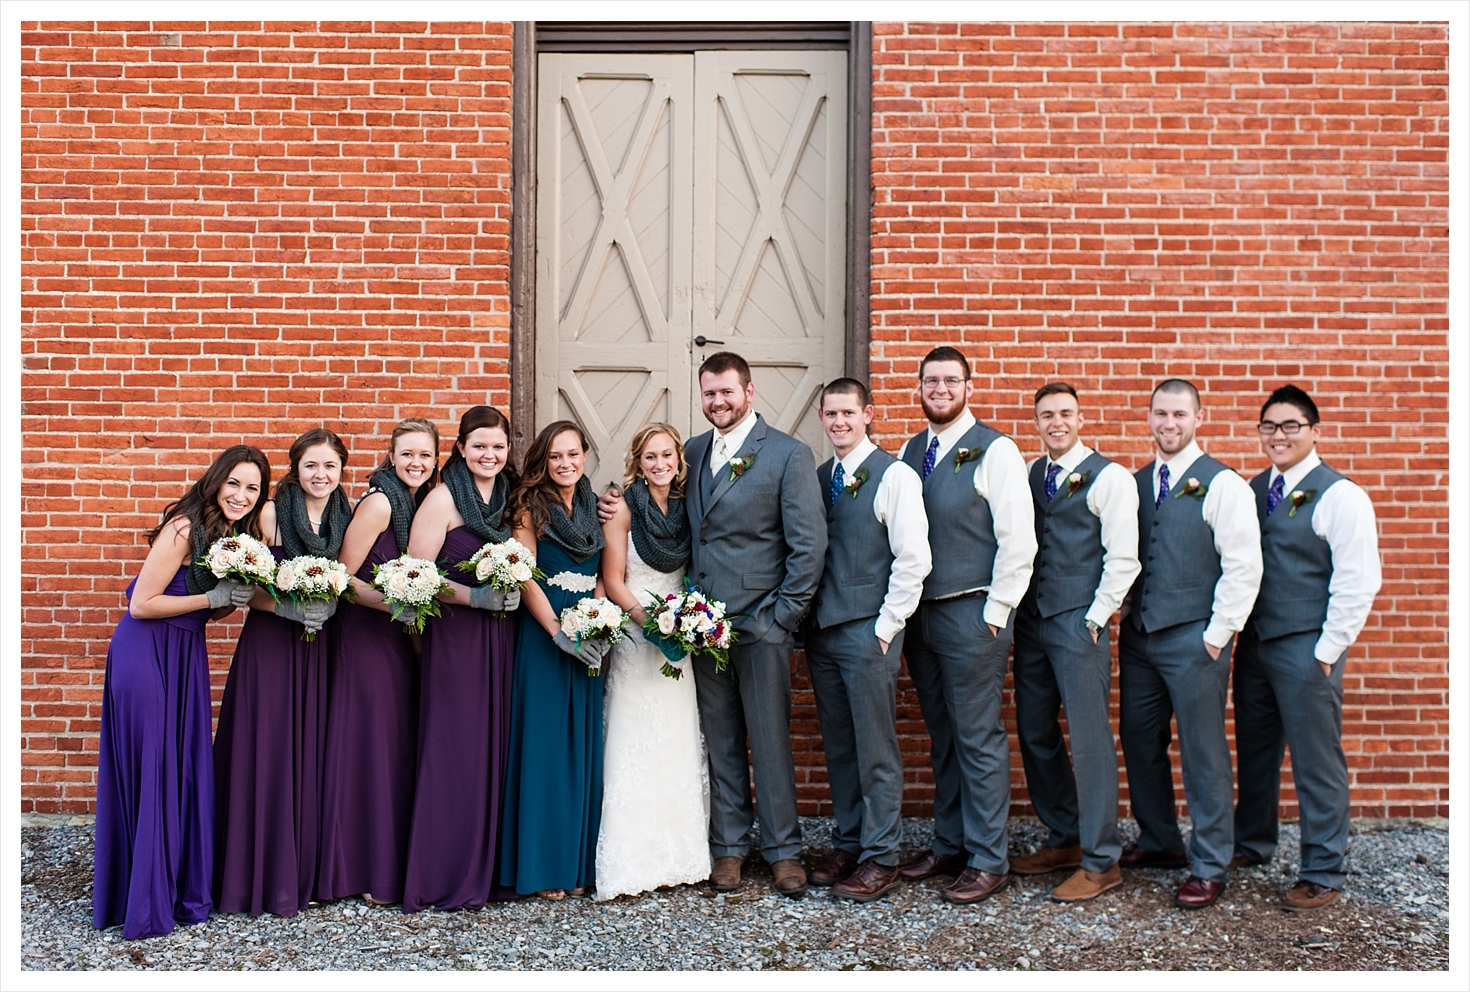 Manheim-Pennsylvania-Booking-House-Wedding-Photography-by-Lauren-R-Swann-photo028